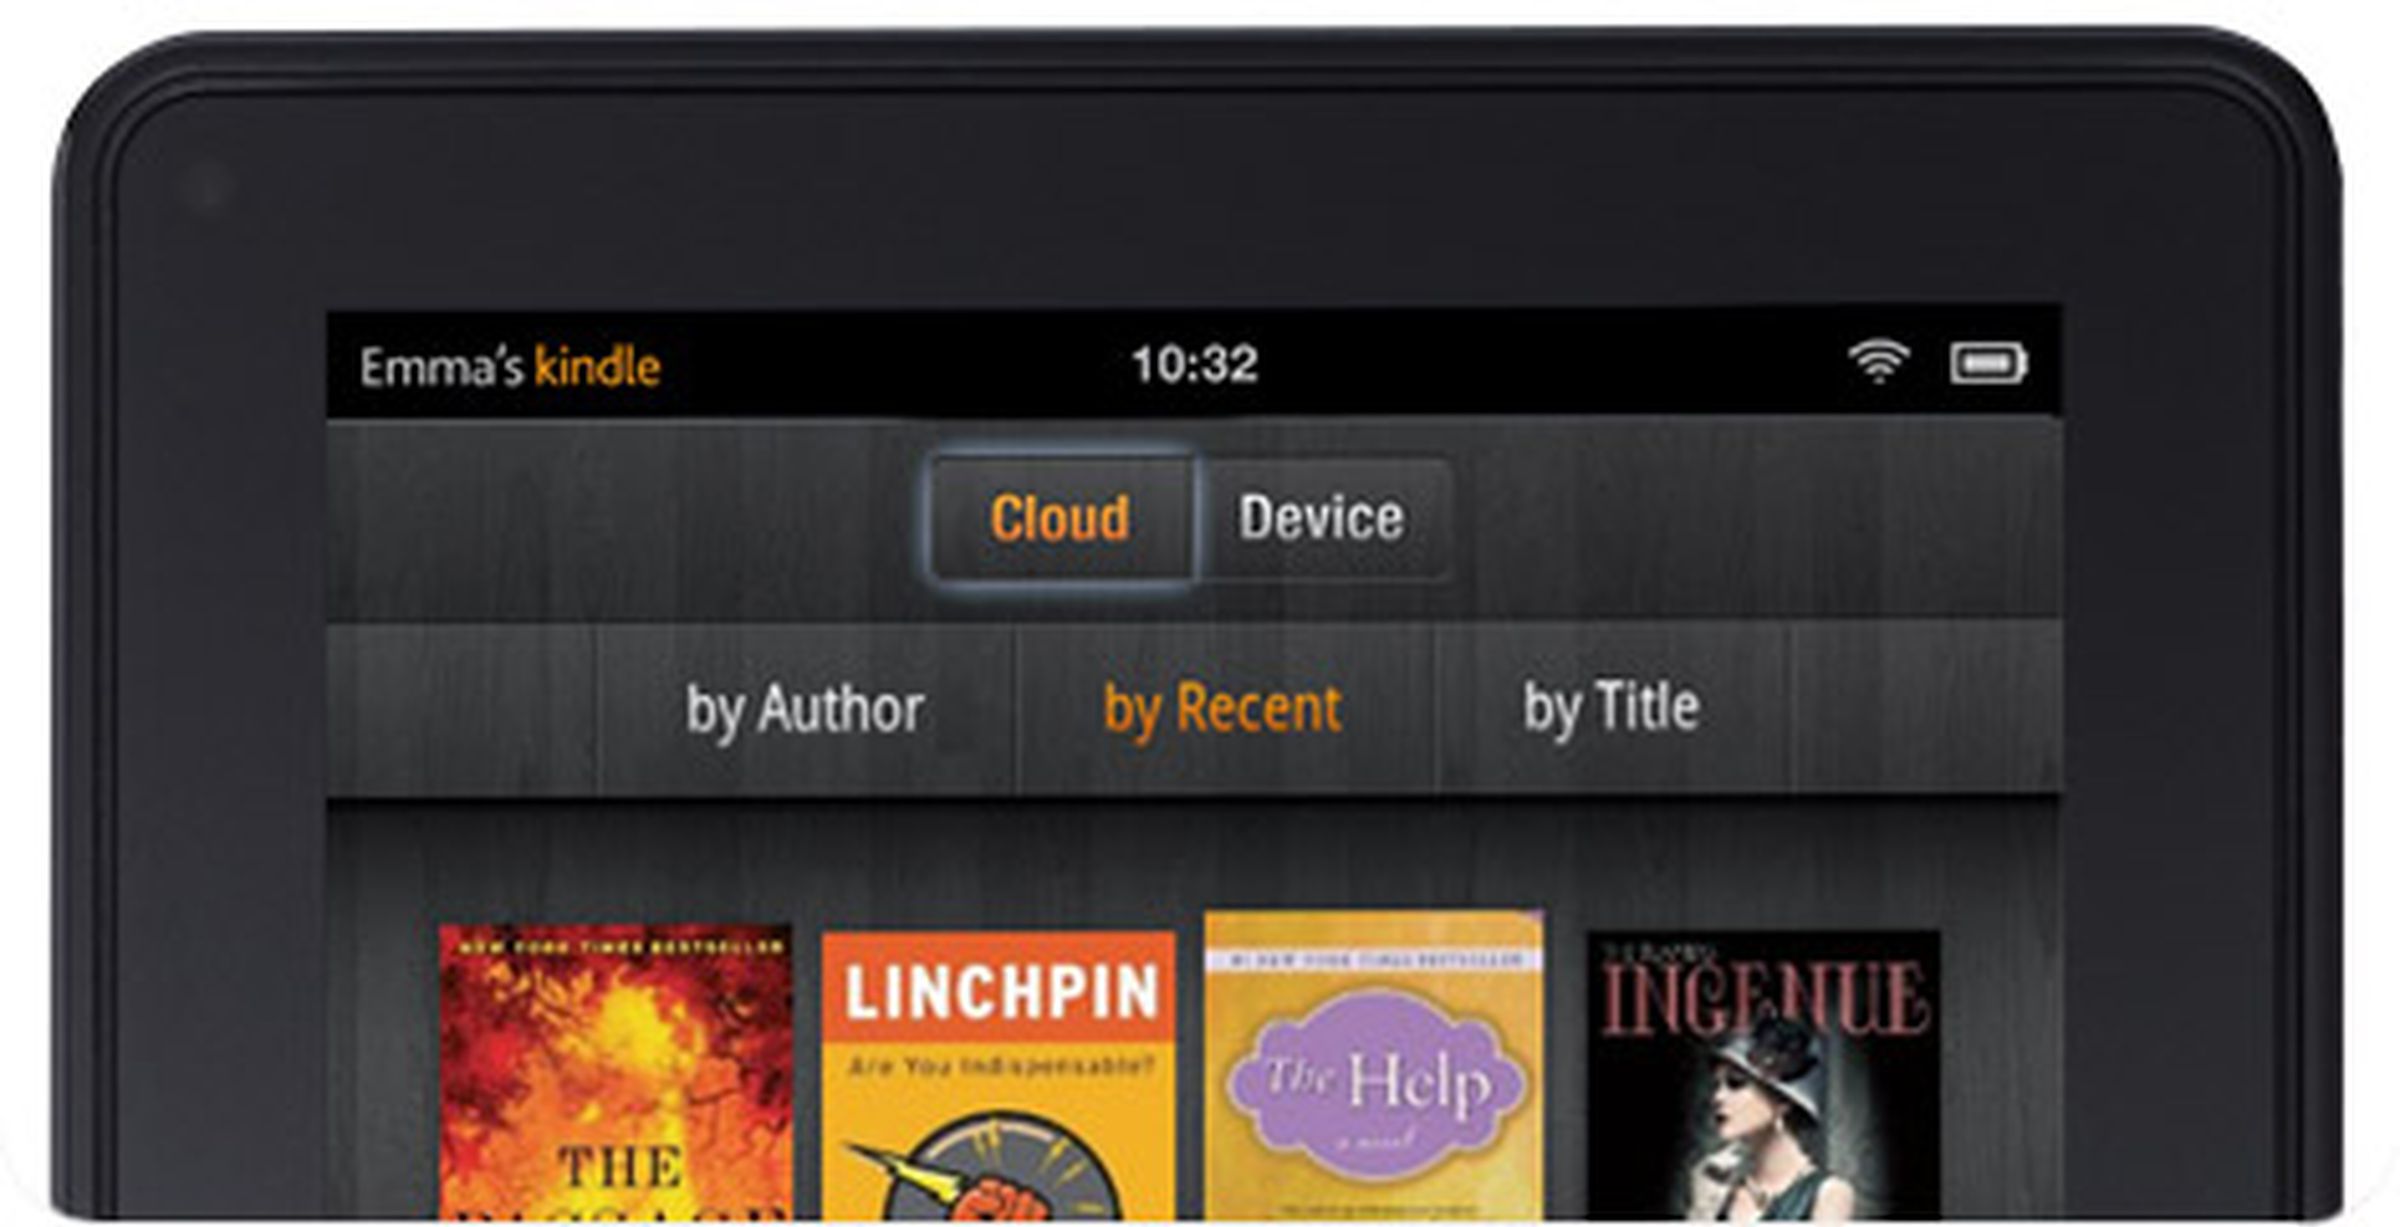 Amazon Kindle Fire UI photos